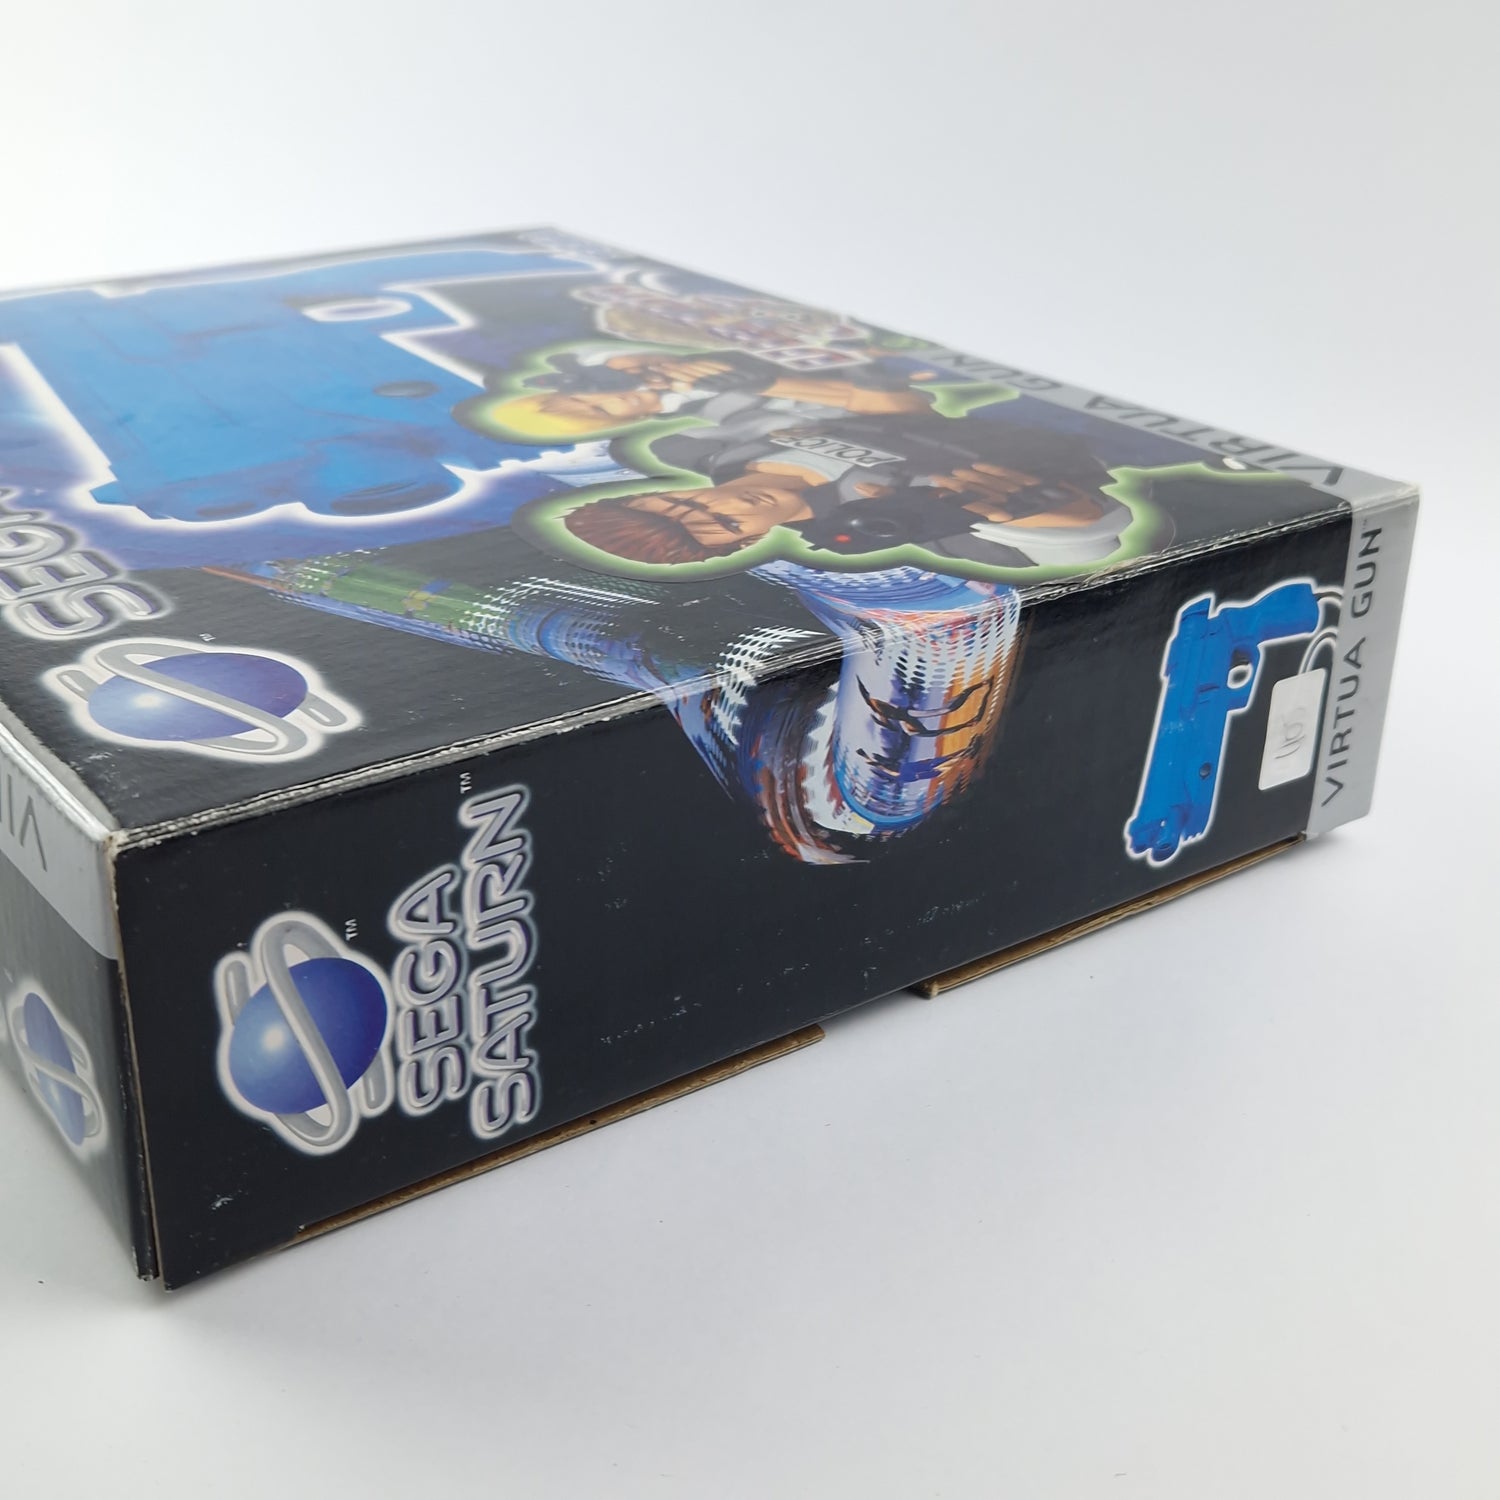 Sega Saturn Accessories: Virtua Gun Controller Pistol + Virtua Cop - OVP PAL